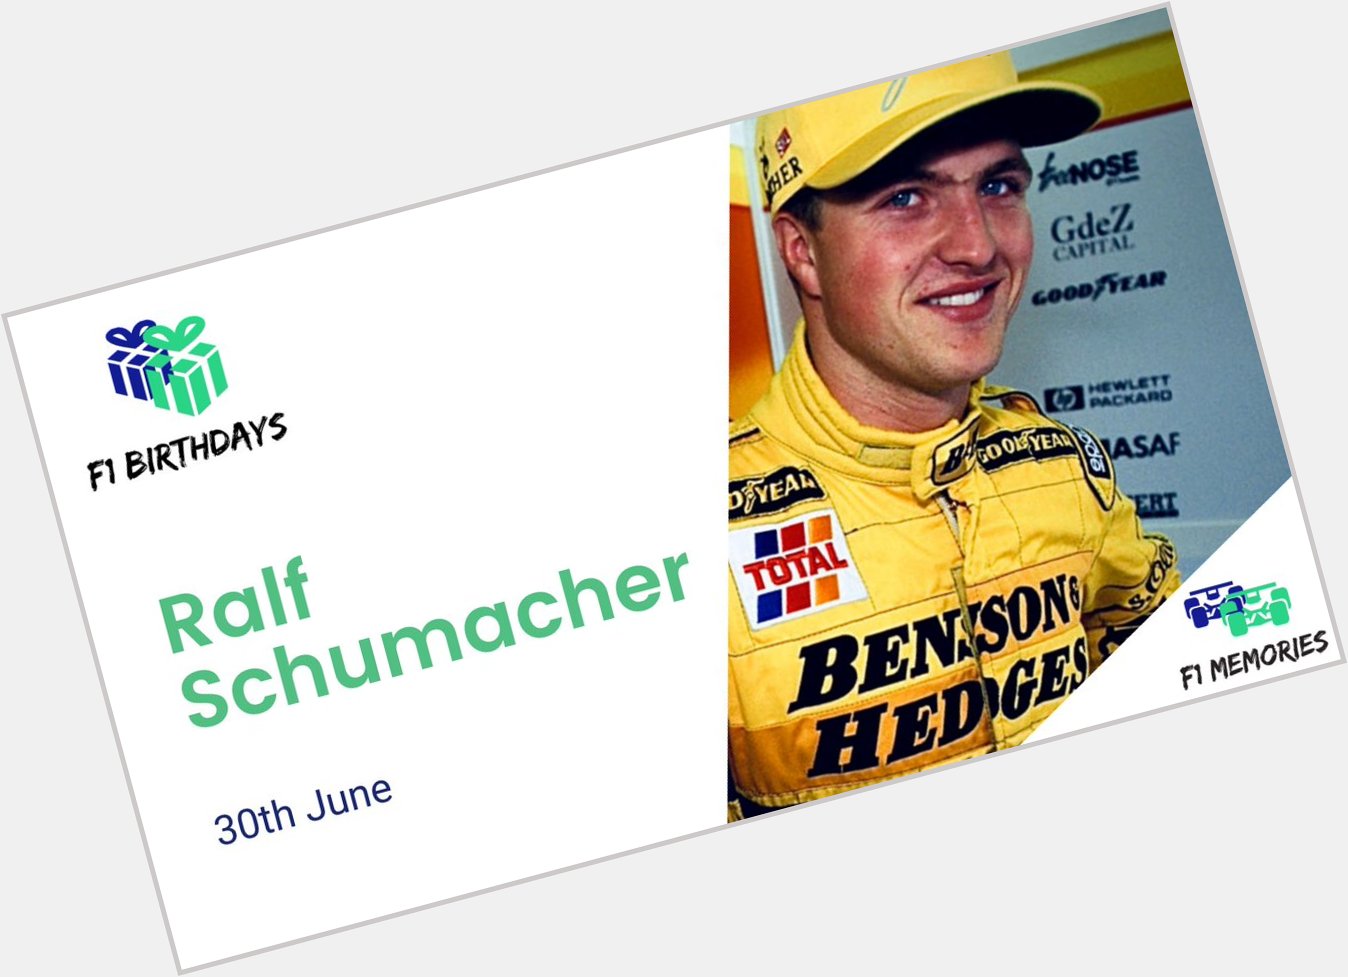 Happy birthday to ex Jordan, Williams & Toyota driver and 6 time GP winner, Ralf Schumacher!  